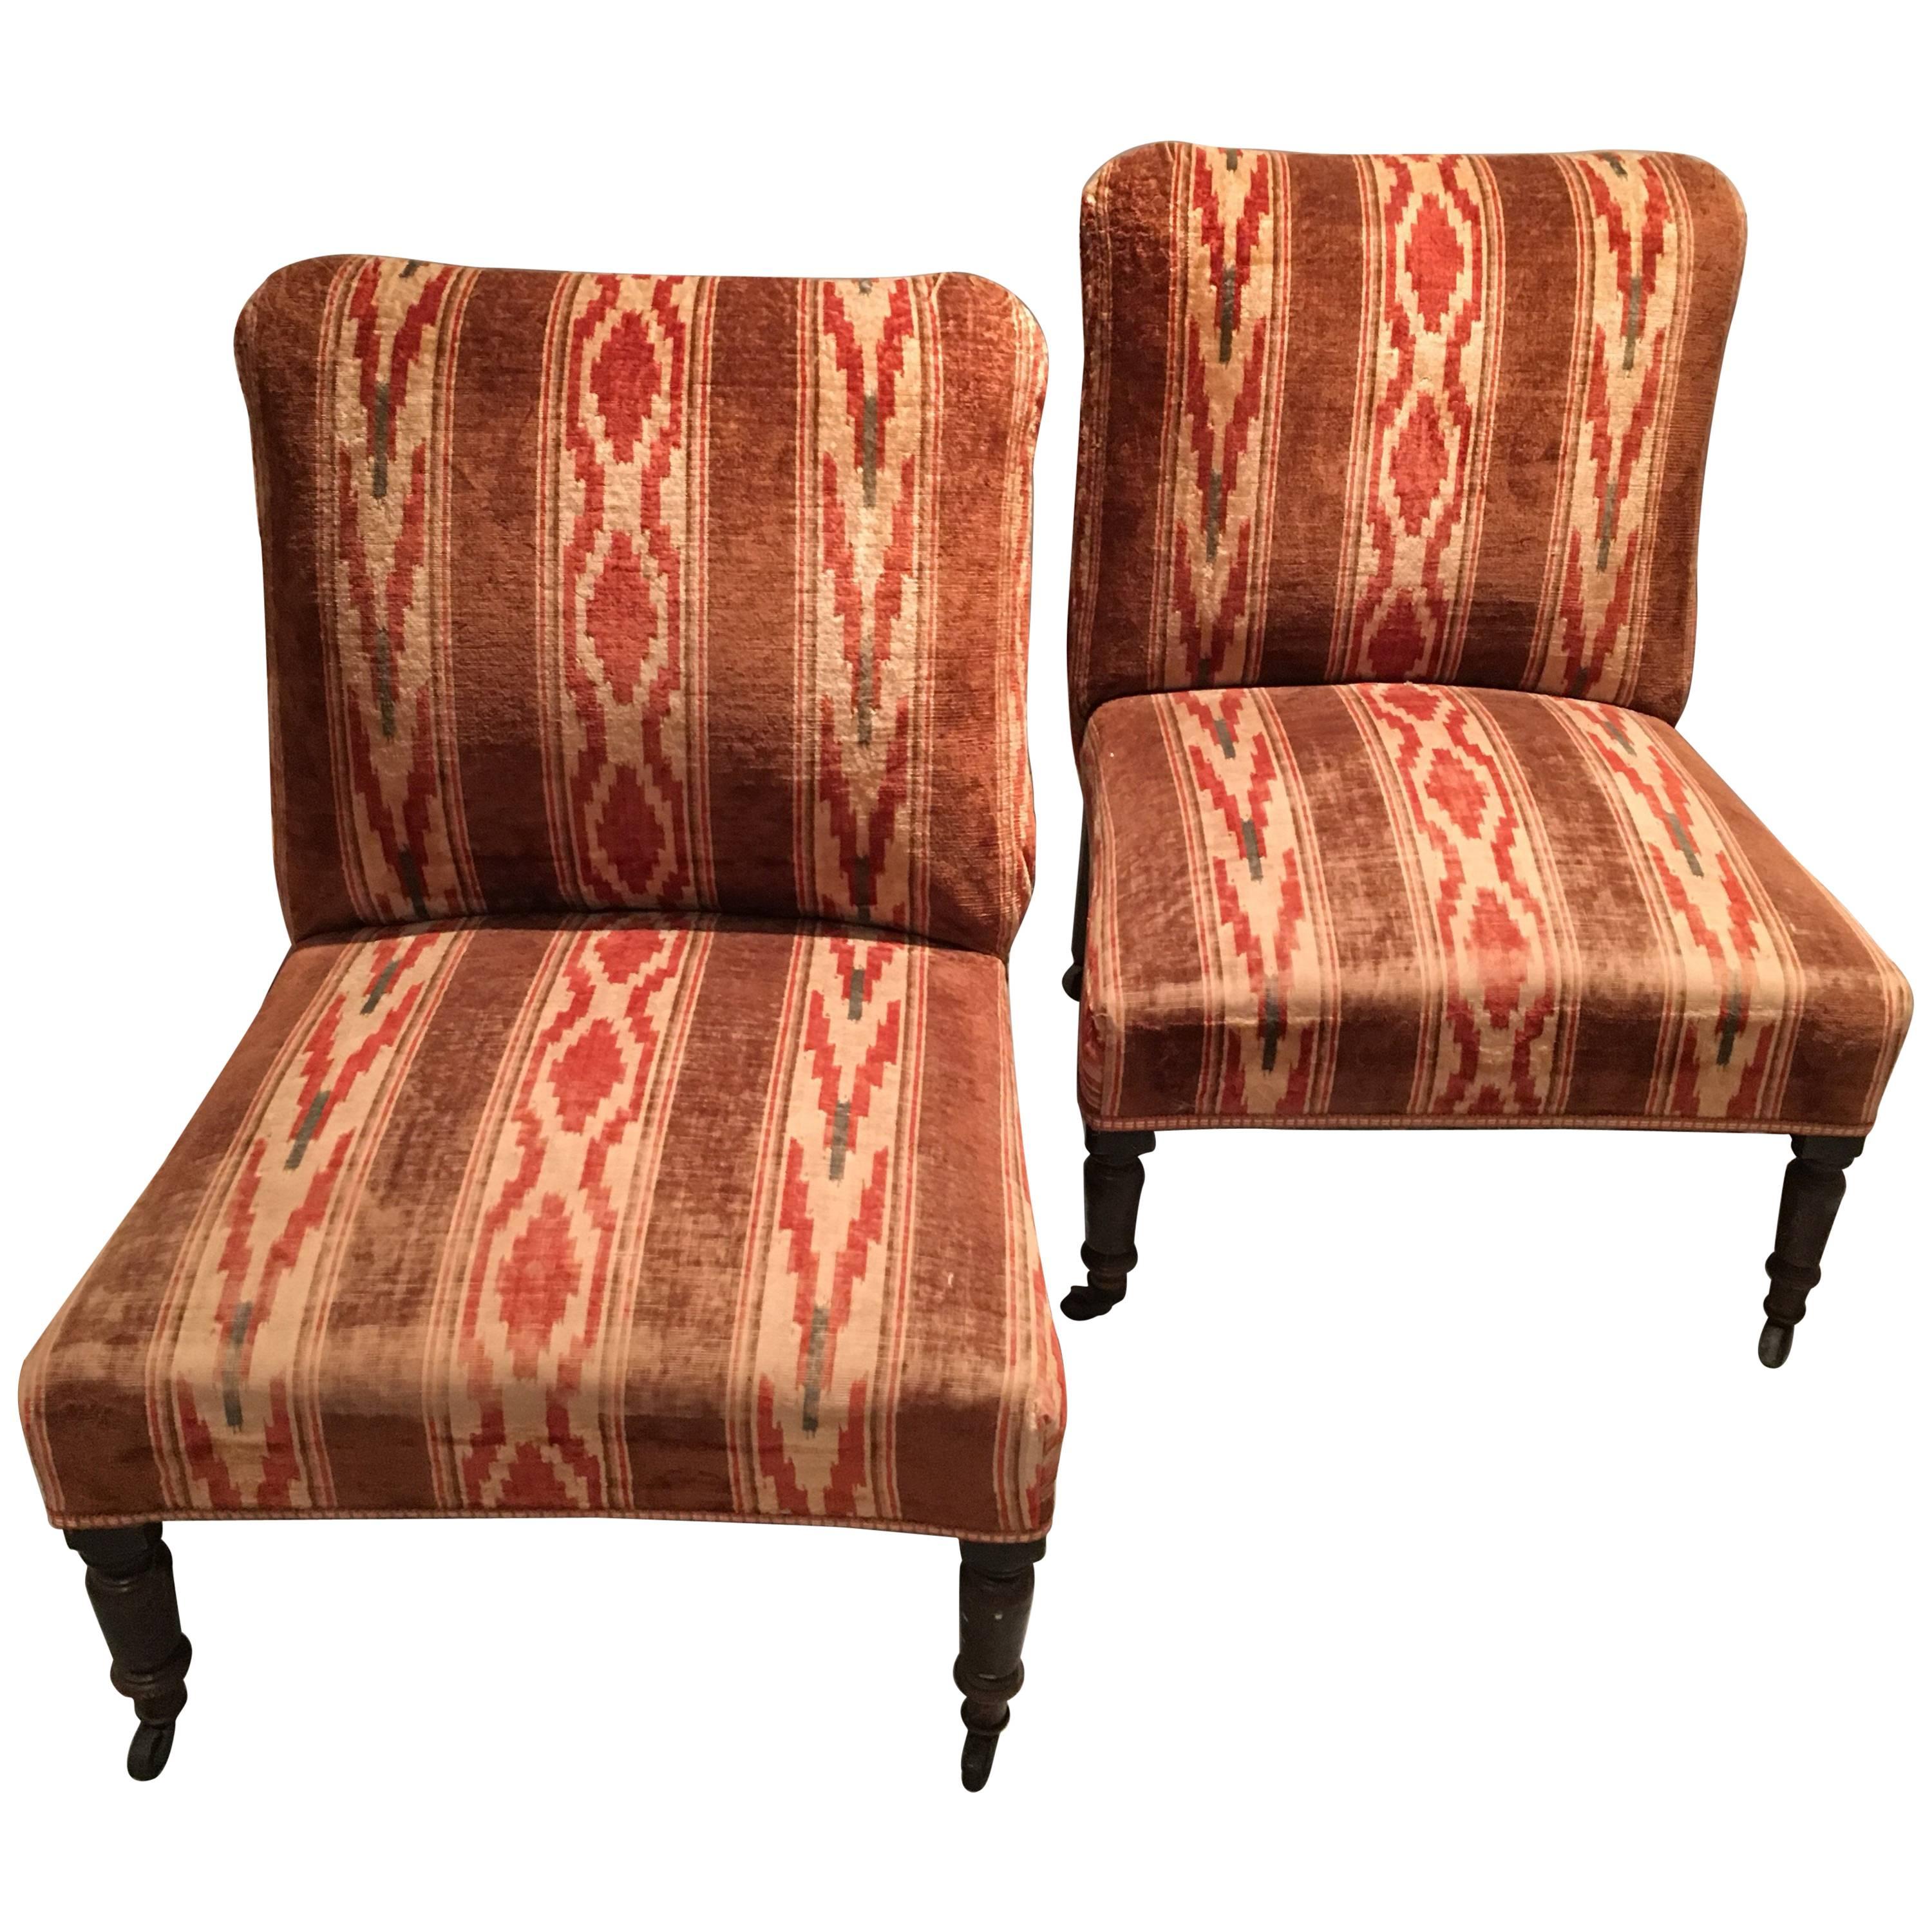 Pair of English Velvet Upholstered Slipper Chairs with Turkish Corners